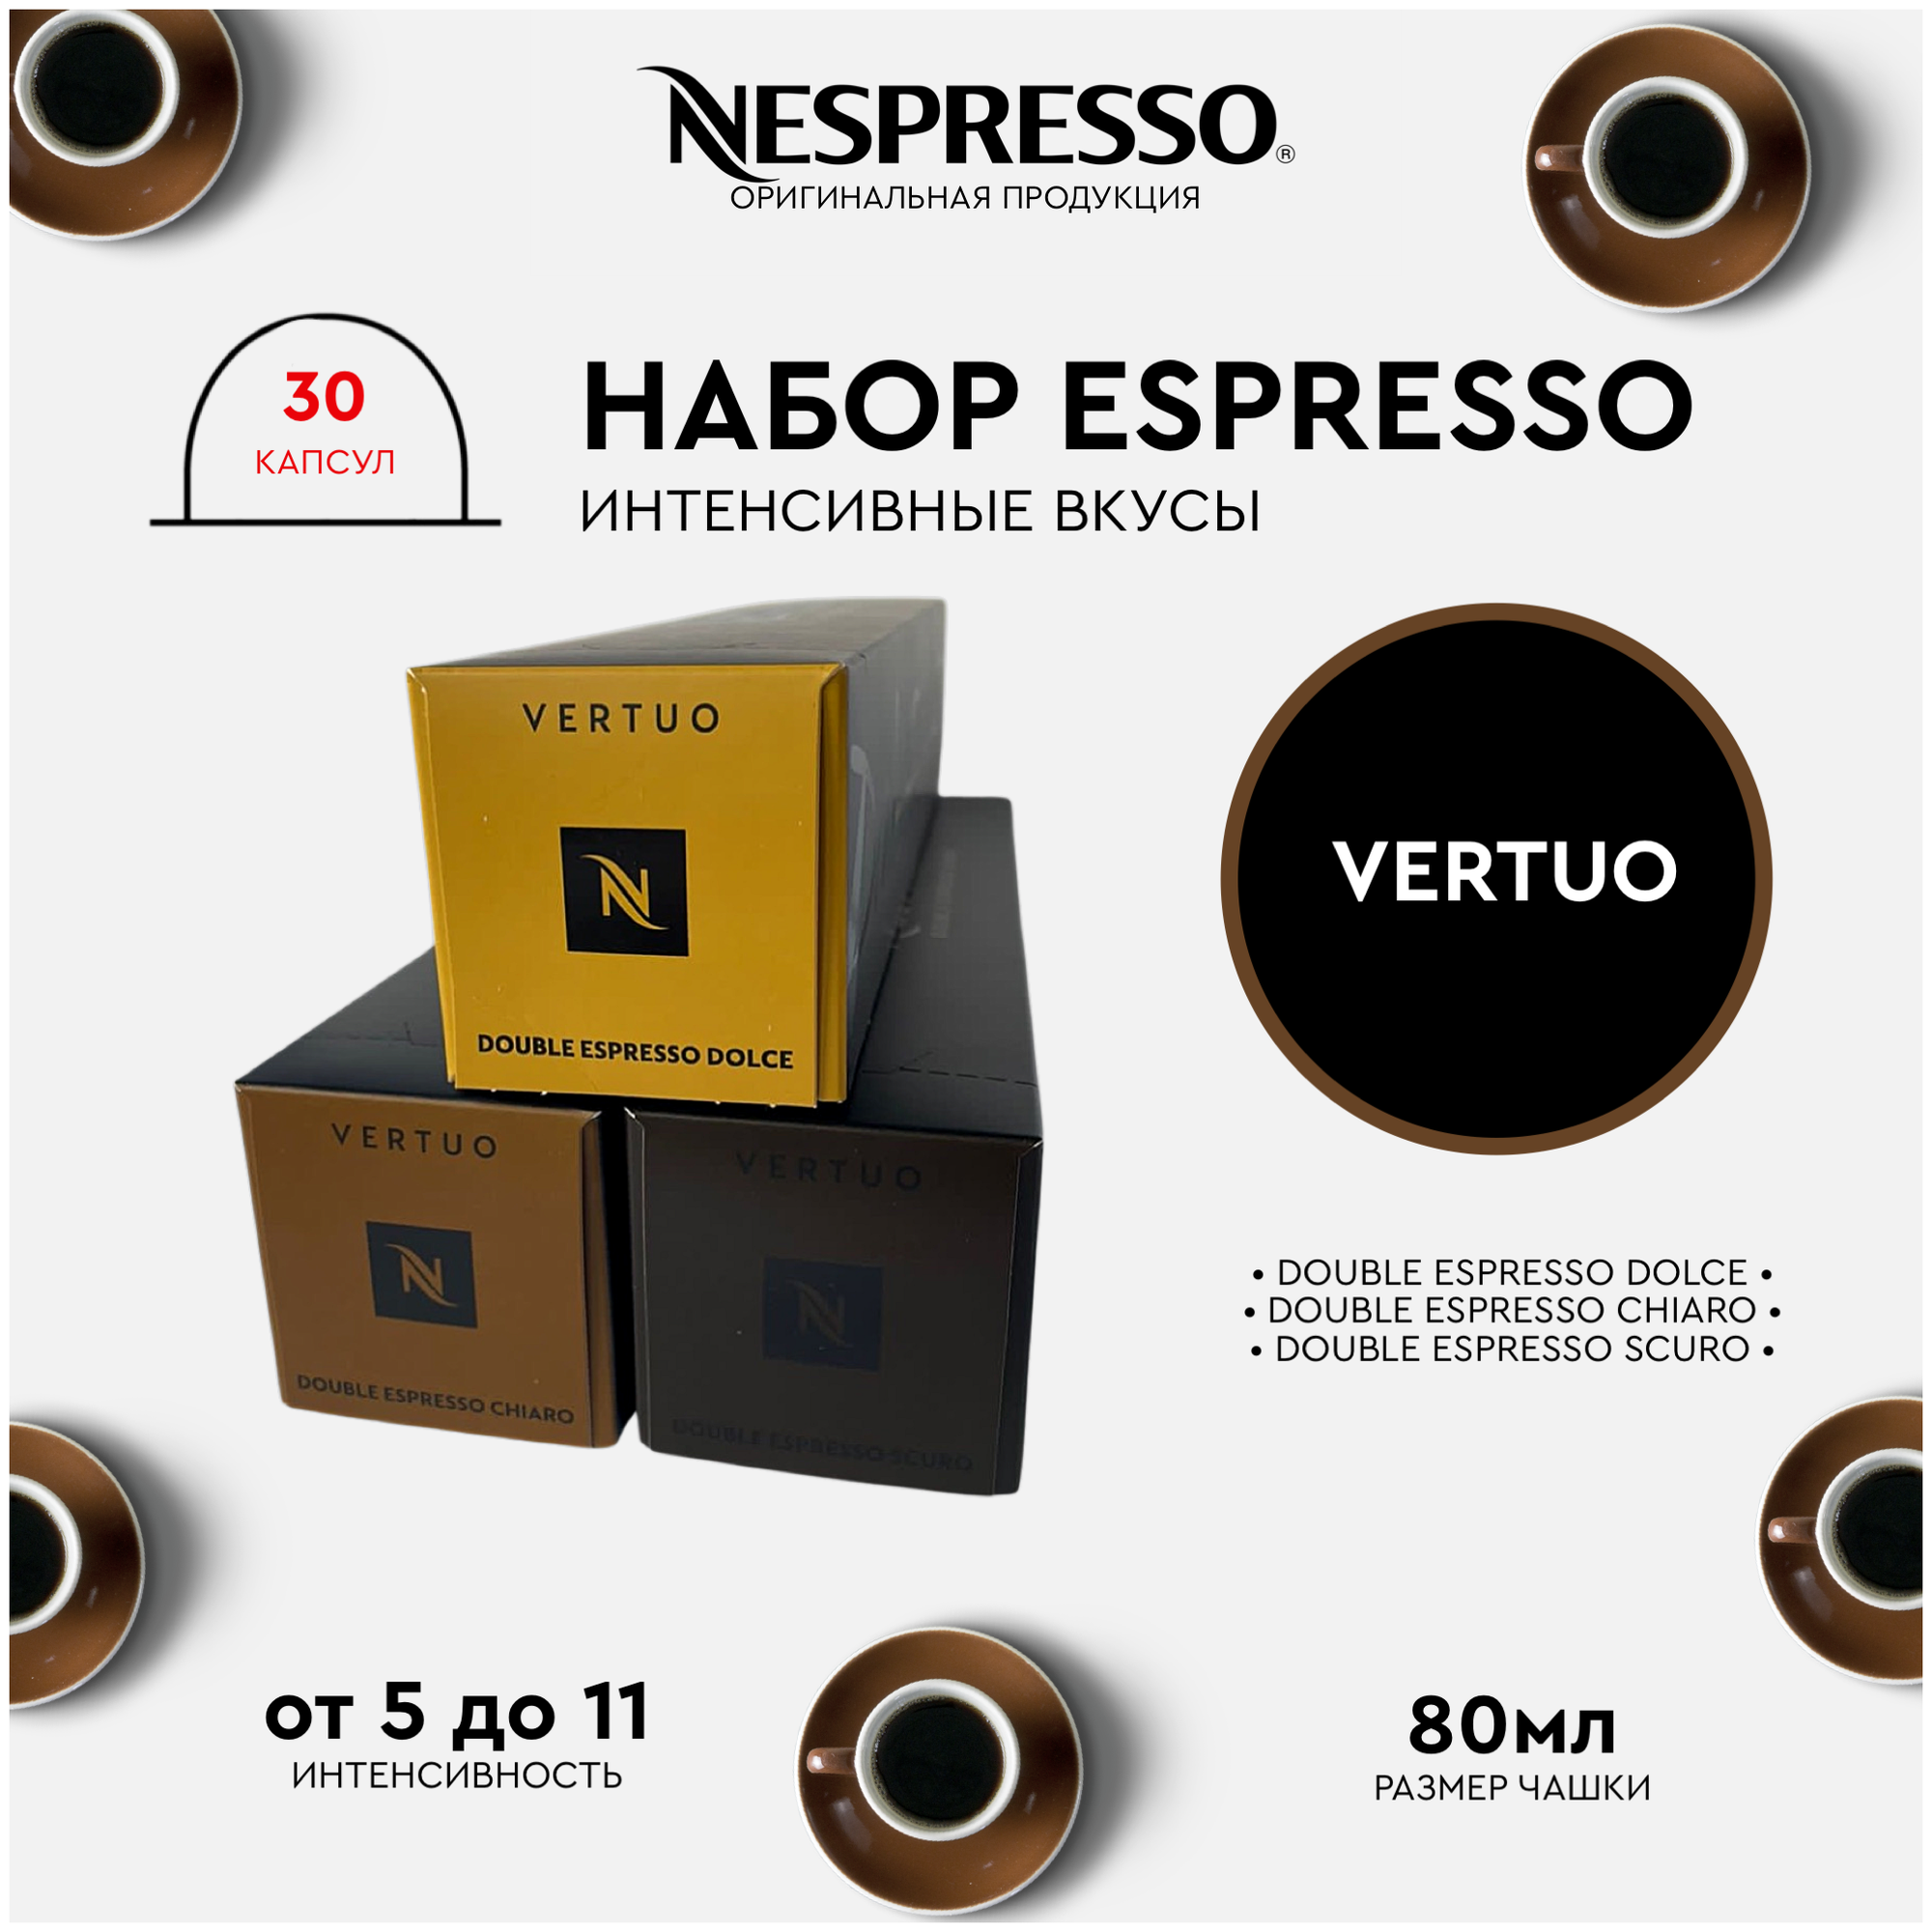 Кофе в капсулах Nespresso Vertuo DOUBLE ESPRESSO CHIARO 80 мл, 10 капсул в уп., 1 упаковка - фотография № 1